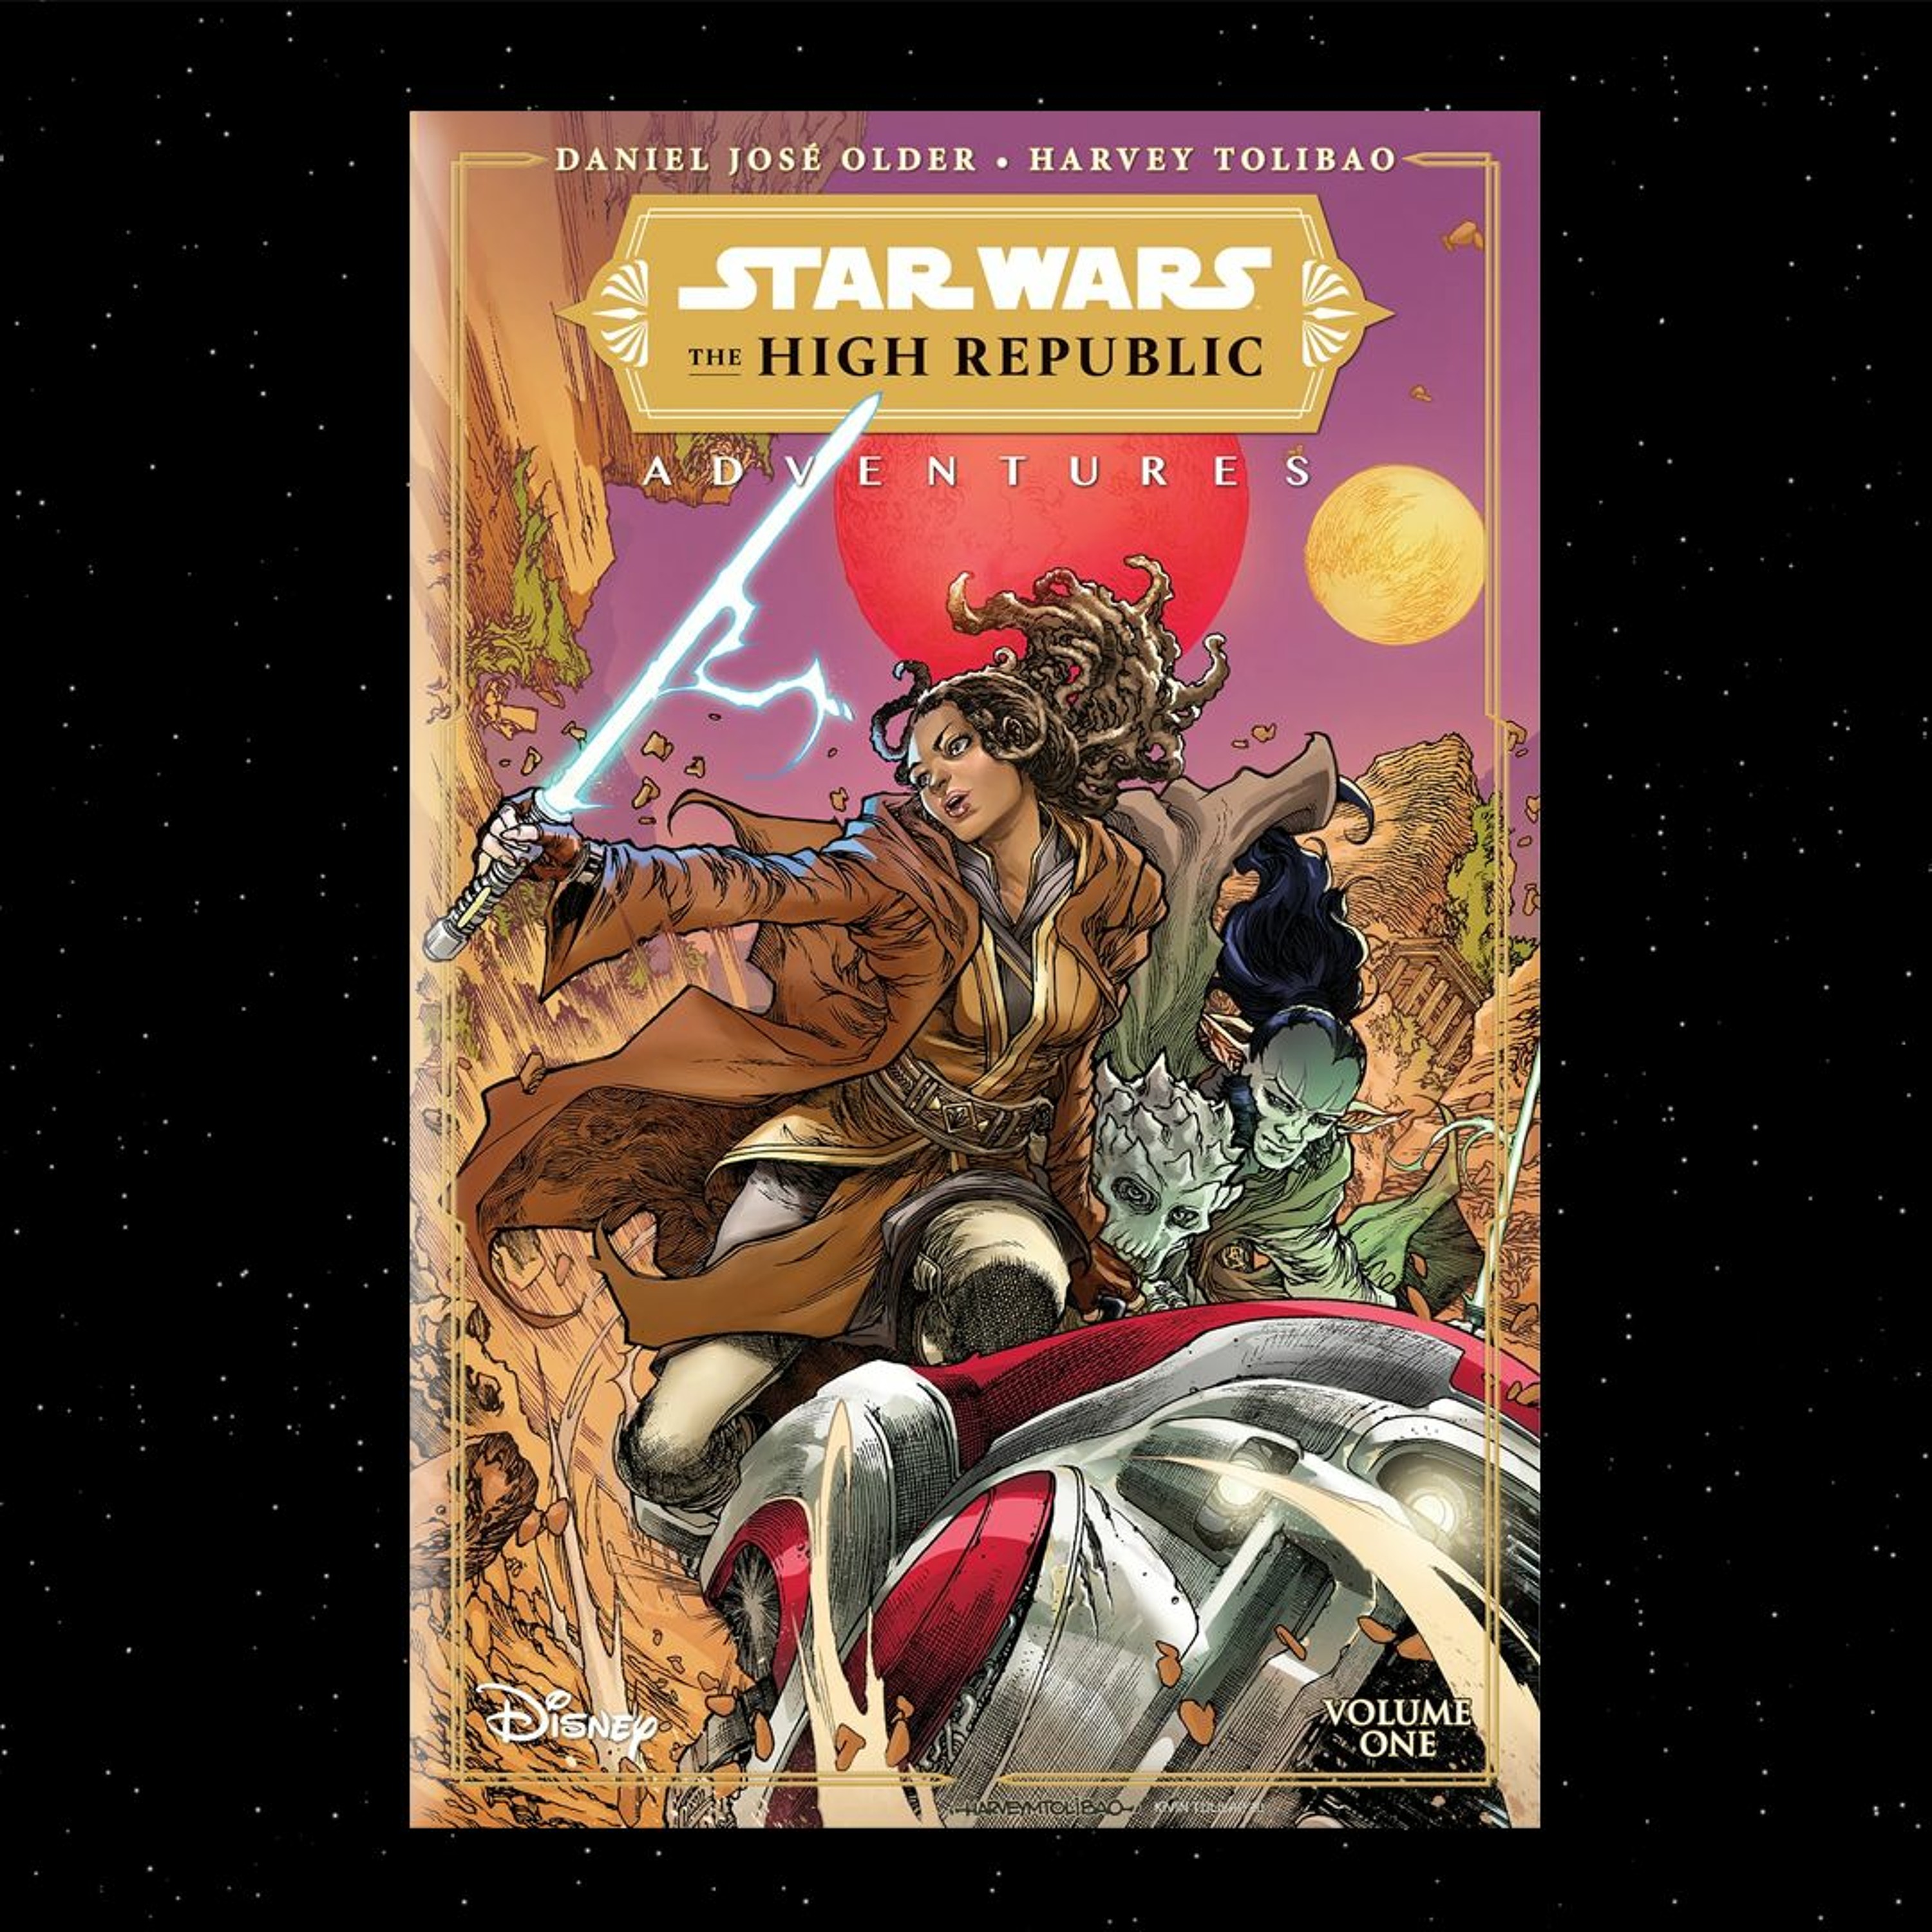 The High Republic Adventures Vol.1